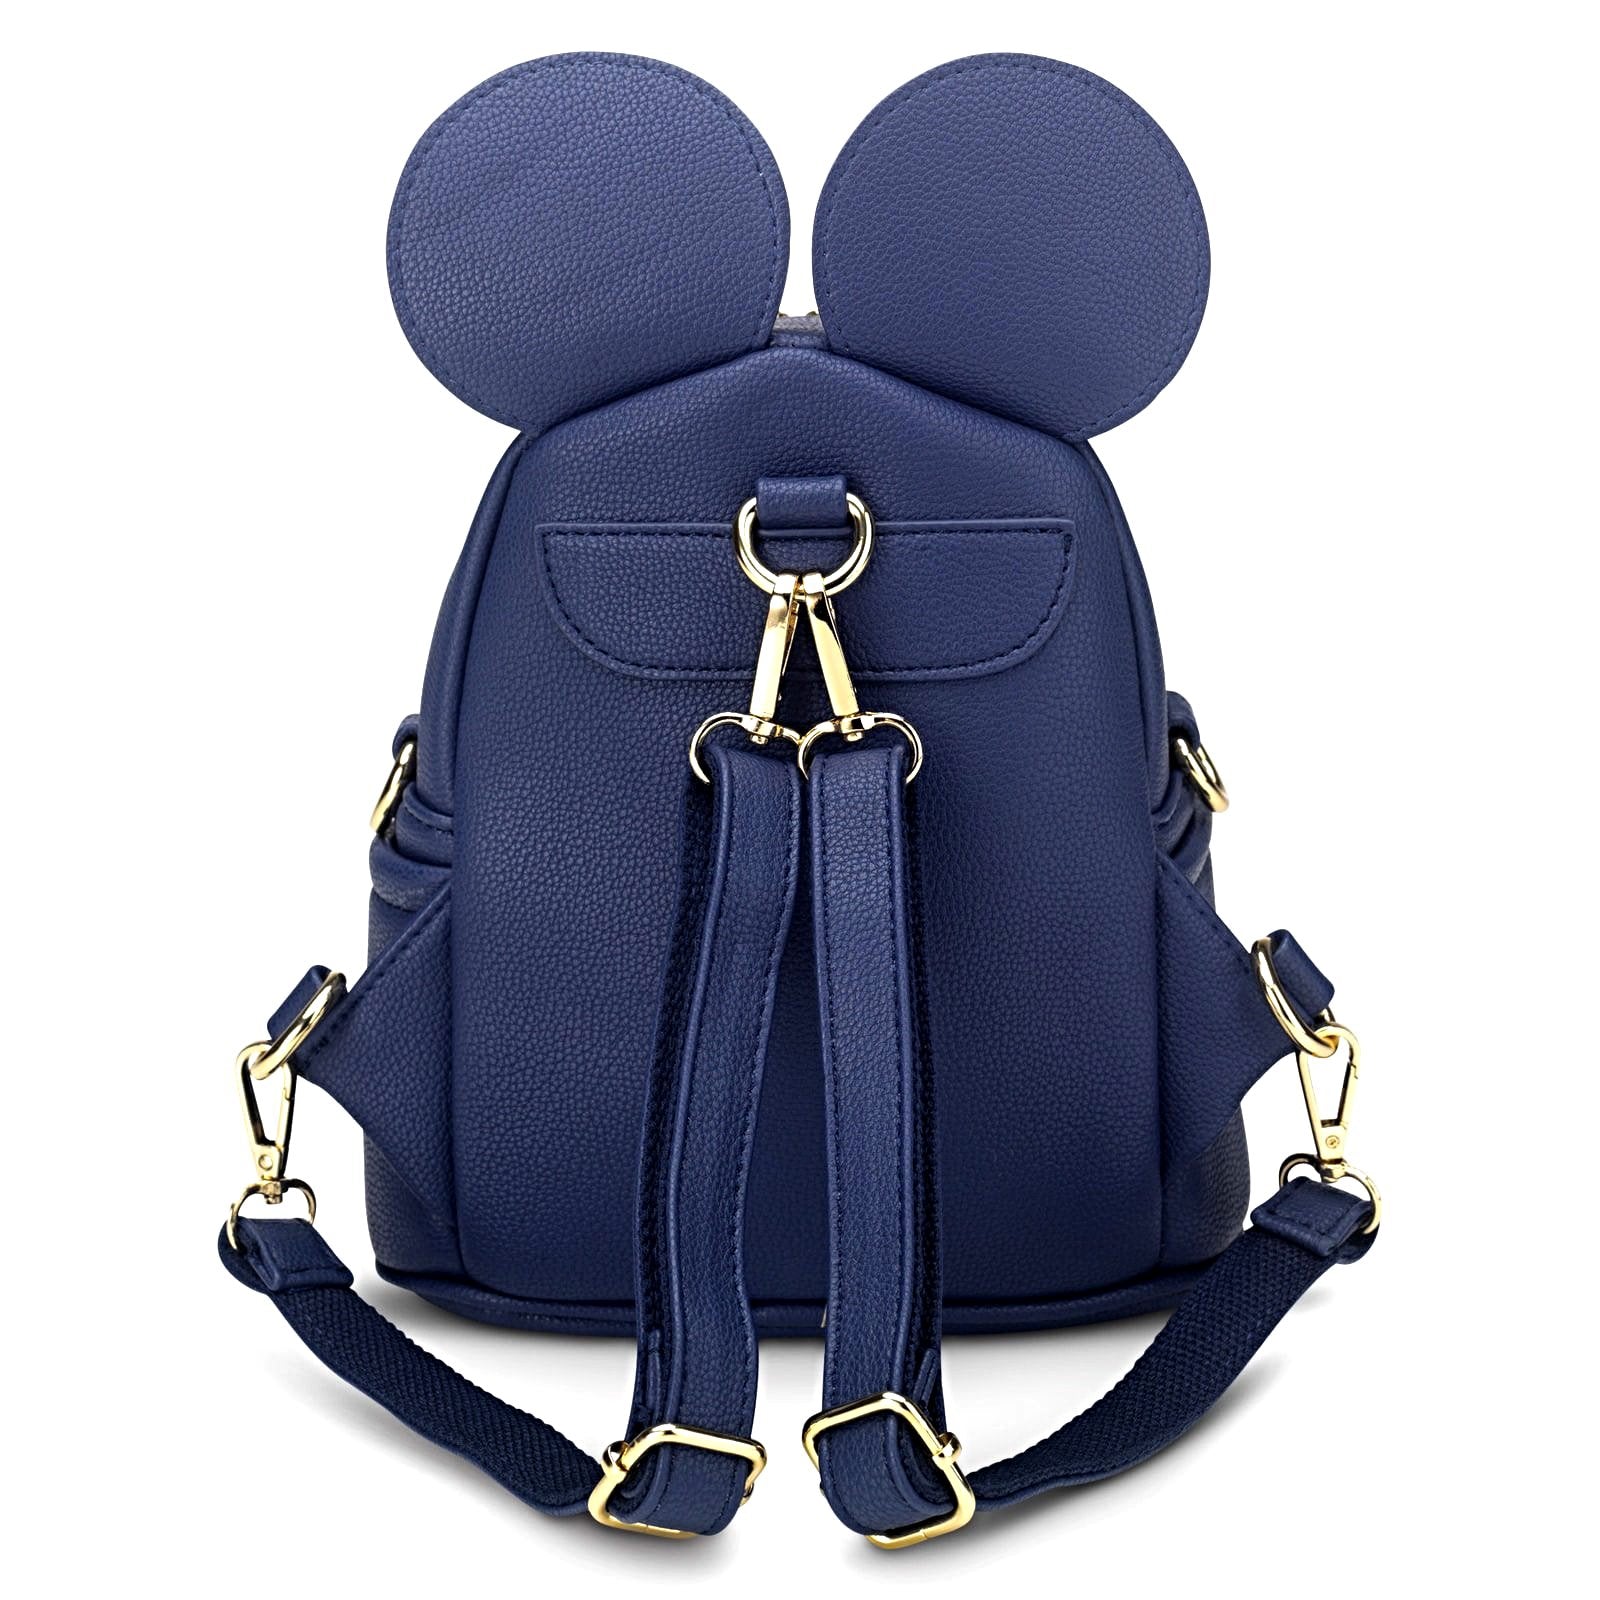 Personalised Children's Ears Blue Backpack